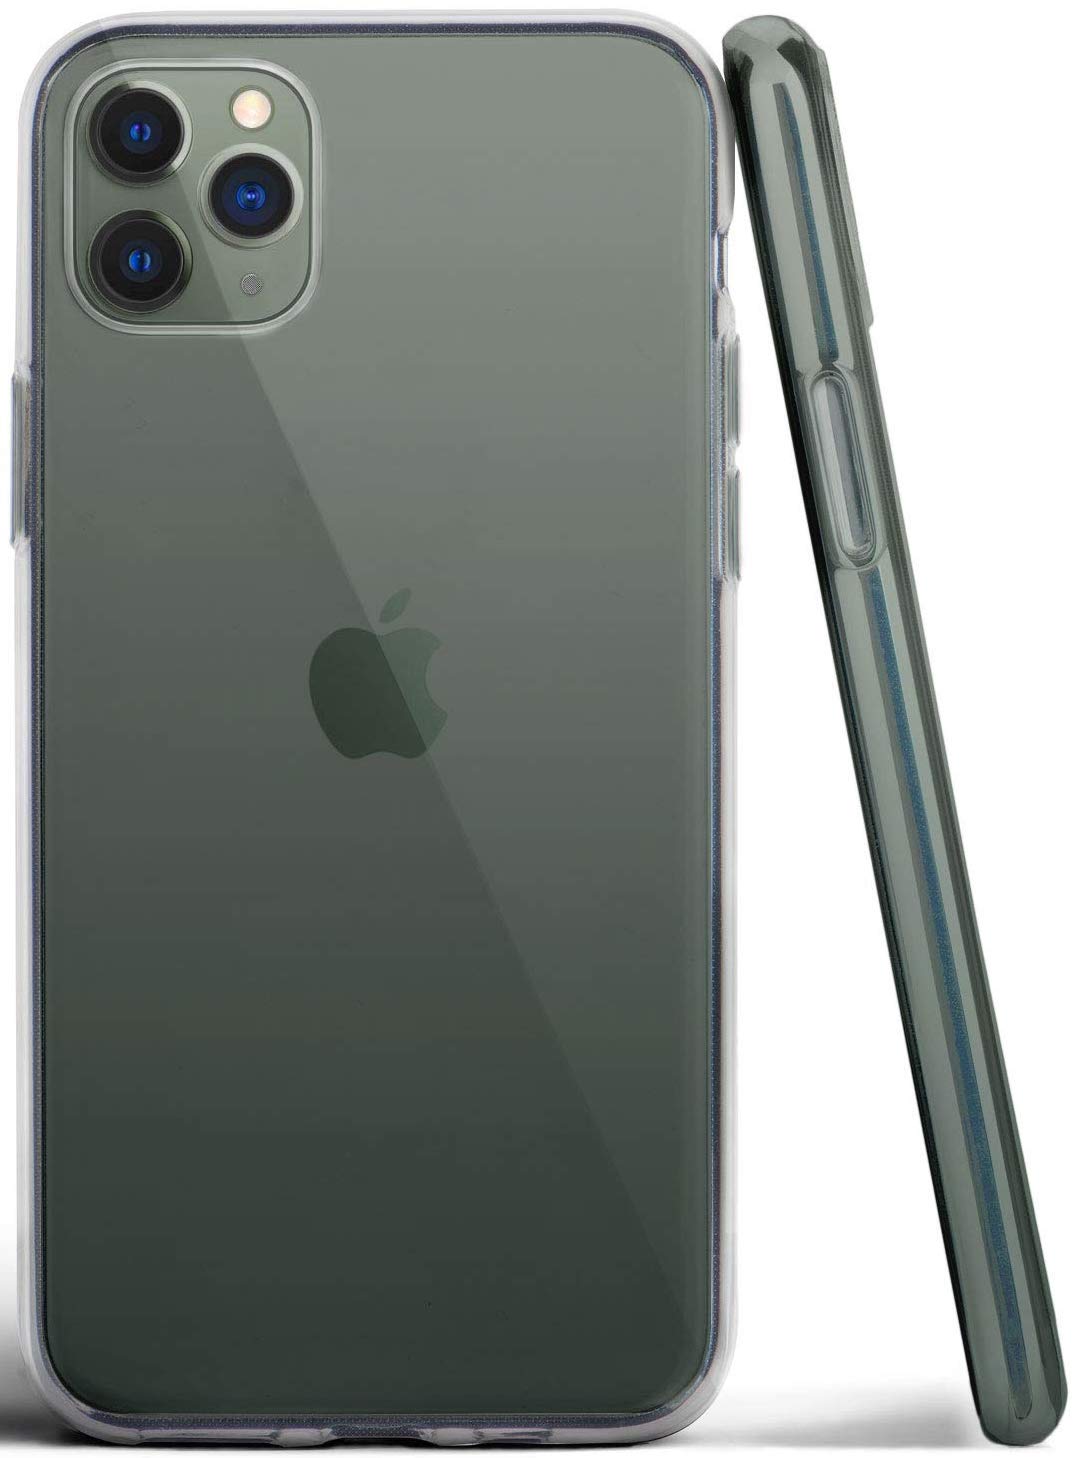 Buy online Silicone Cover Premium iPhone 11 Pro Max Blue